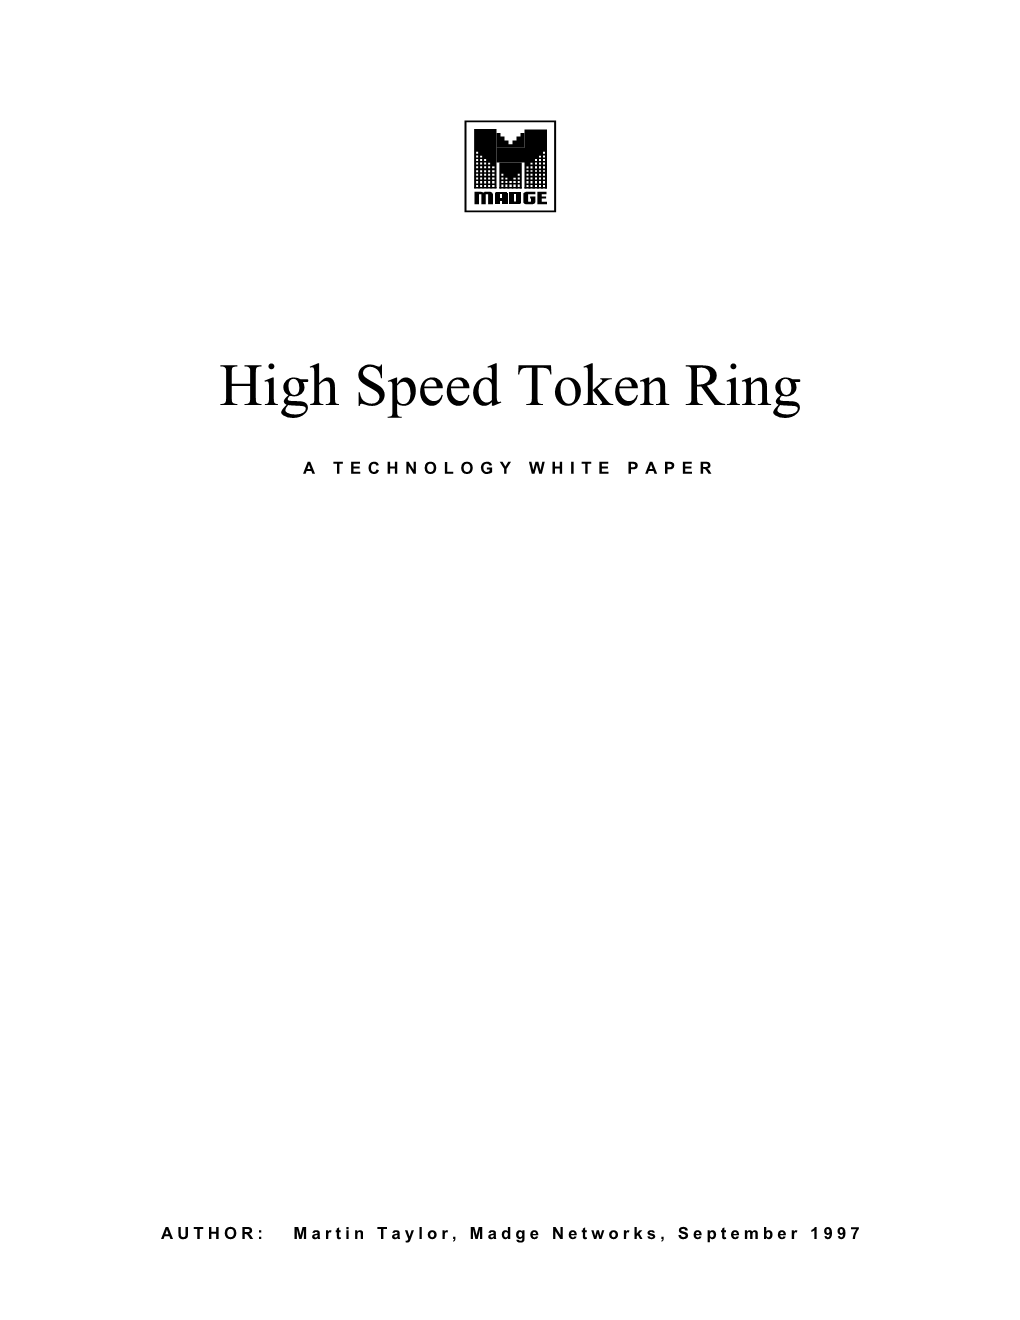 High Speed Token Ring White Paper